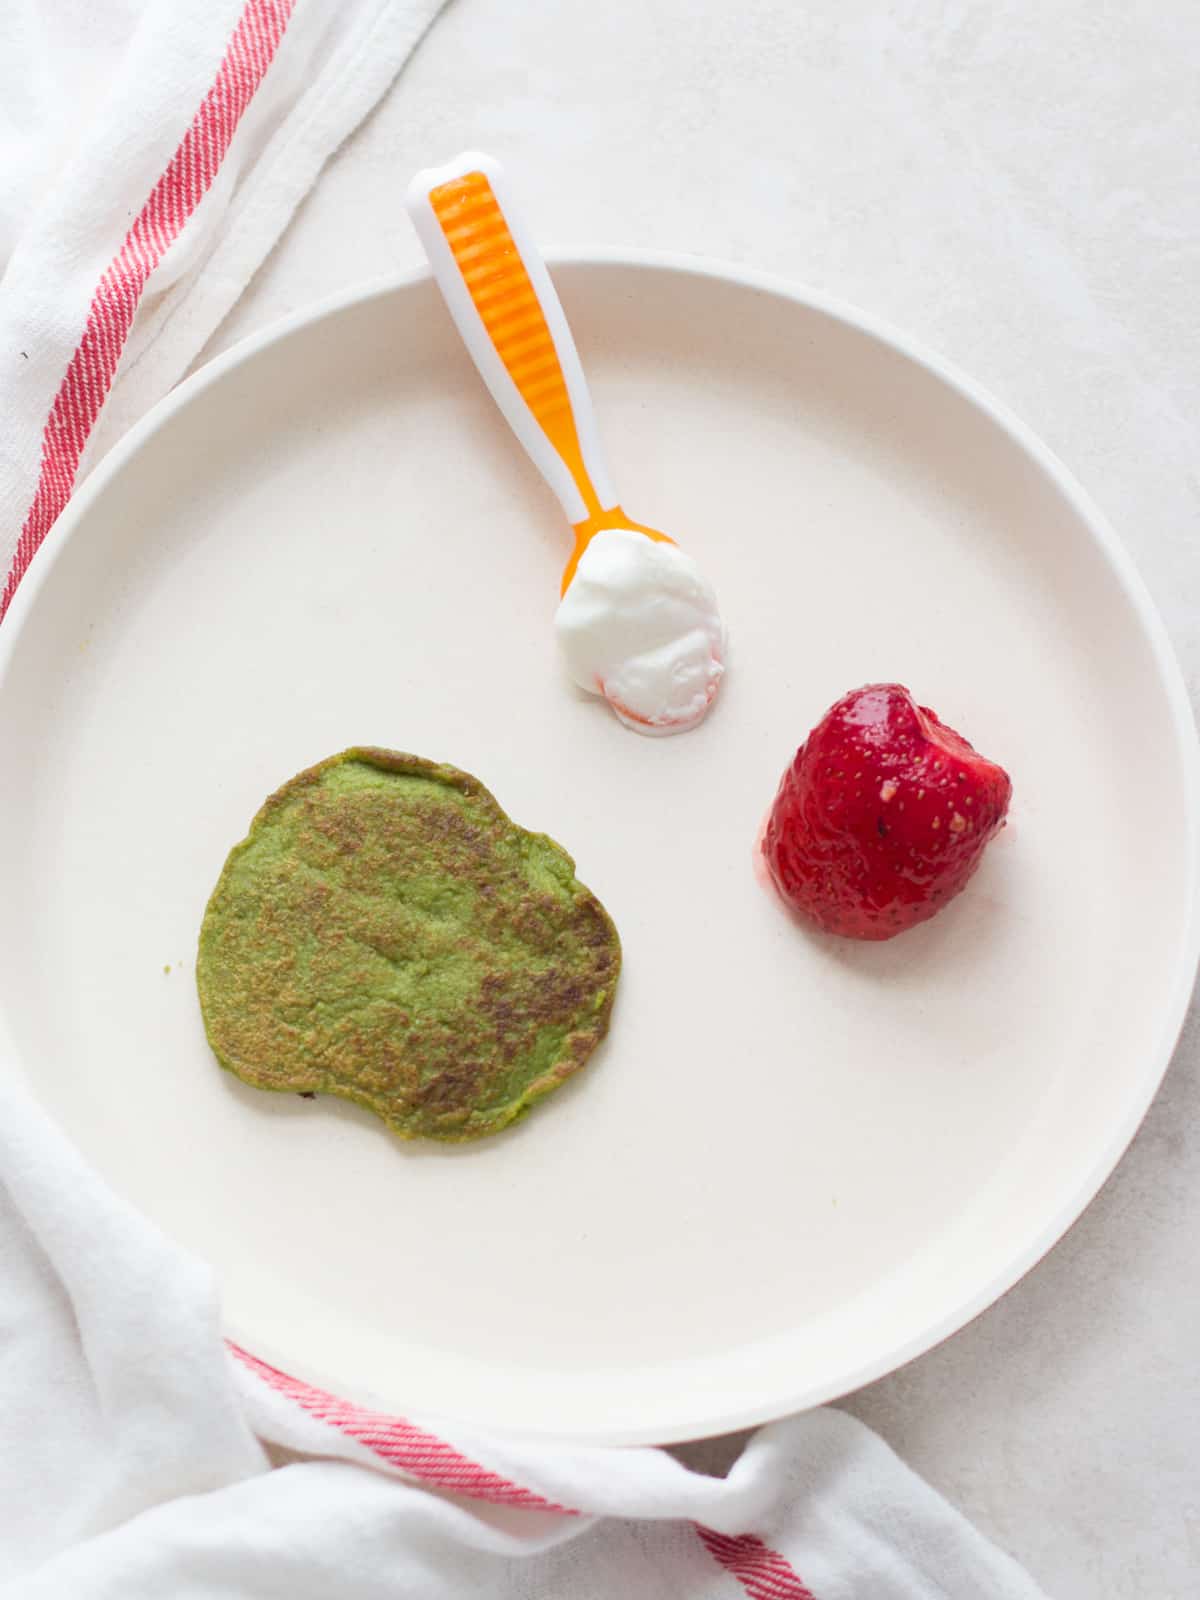 Baby's plate with one pancake, strawberry, yogurt.